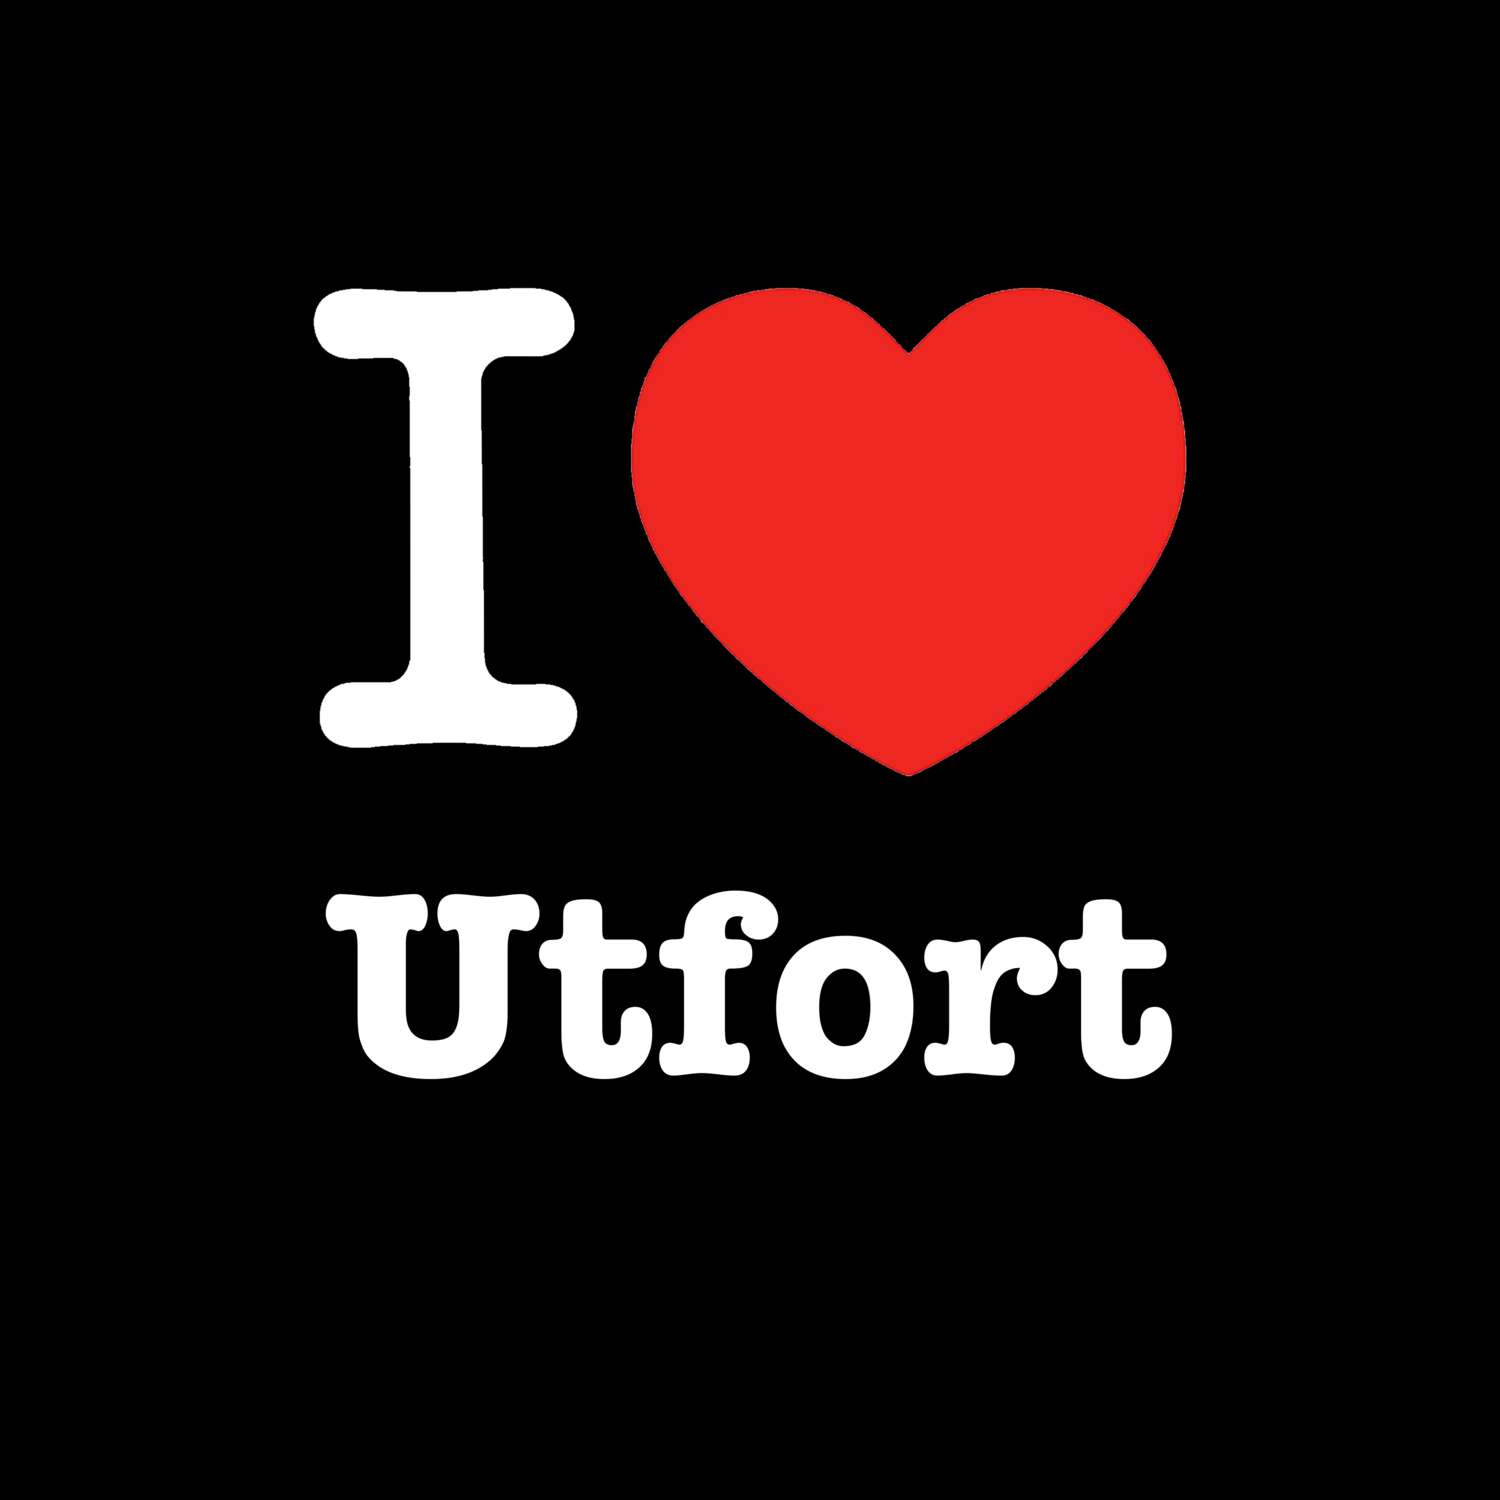 Utfort T-Shirt »I love«